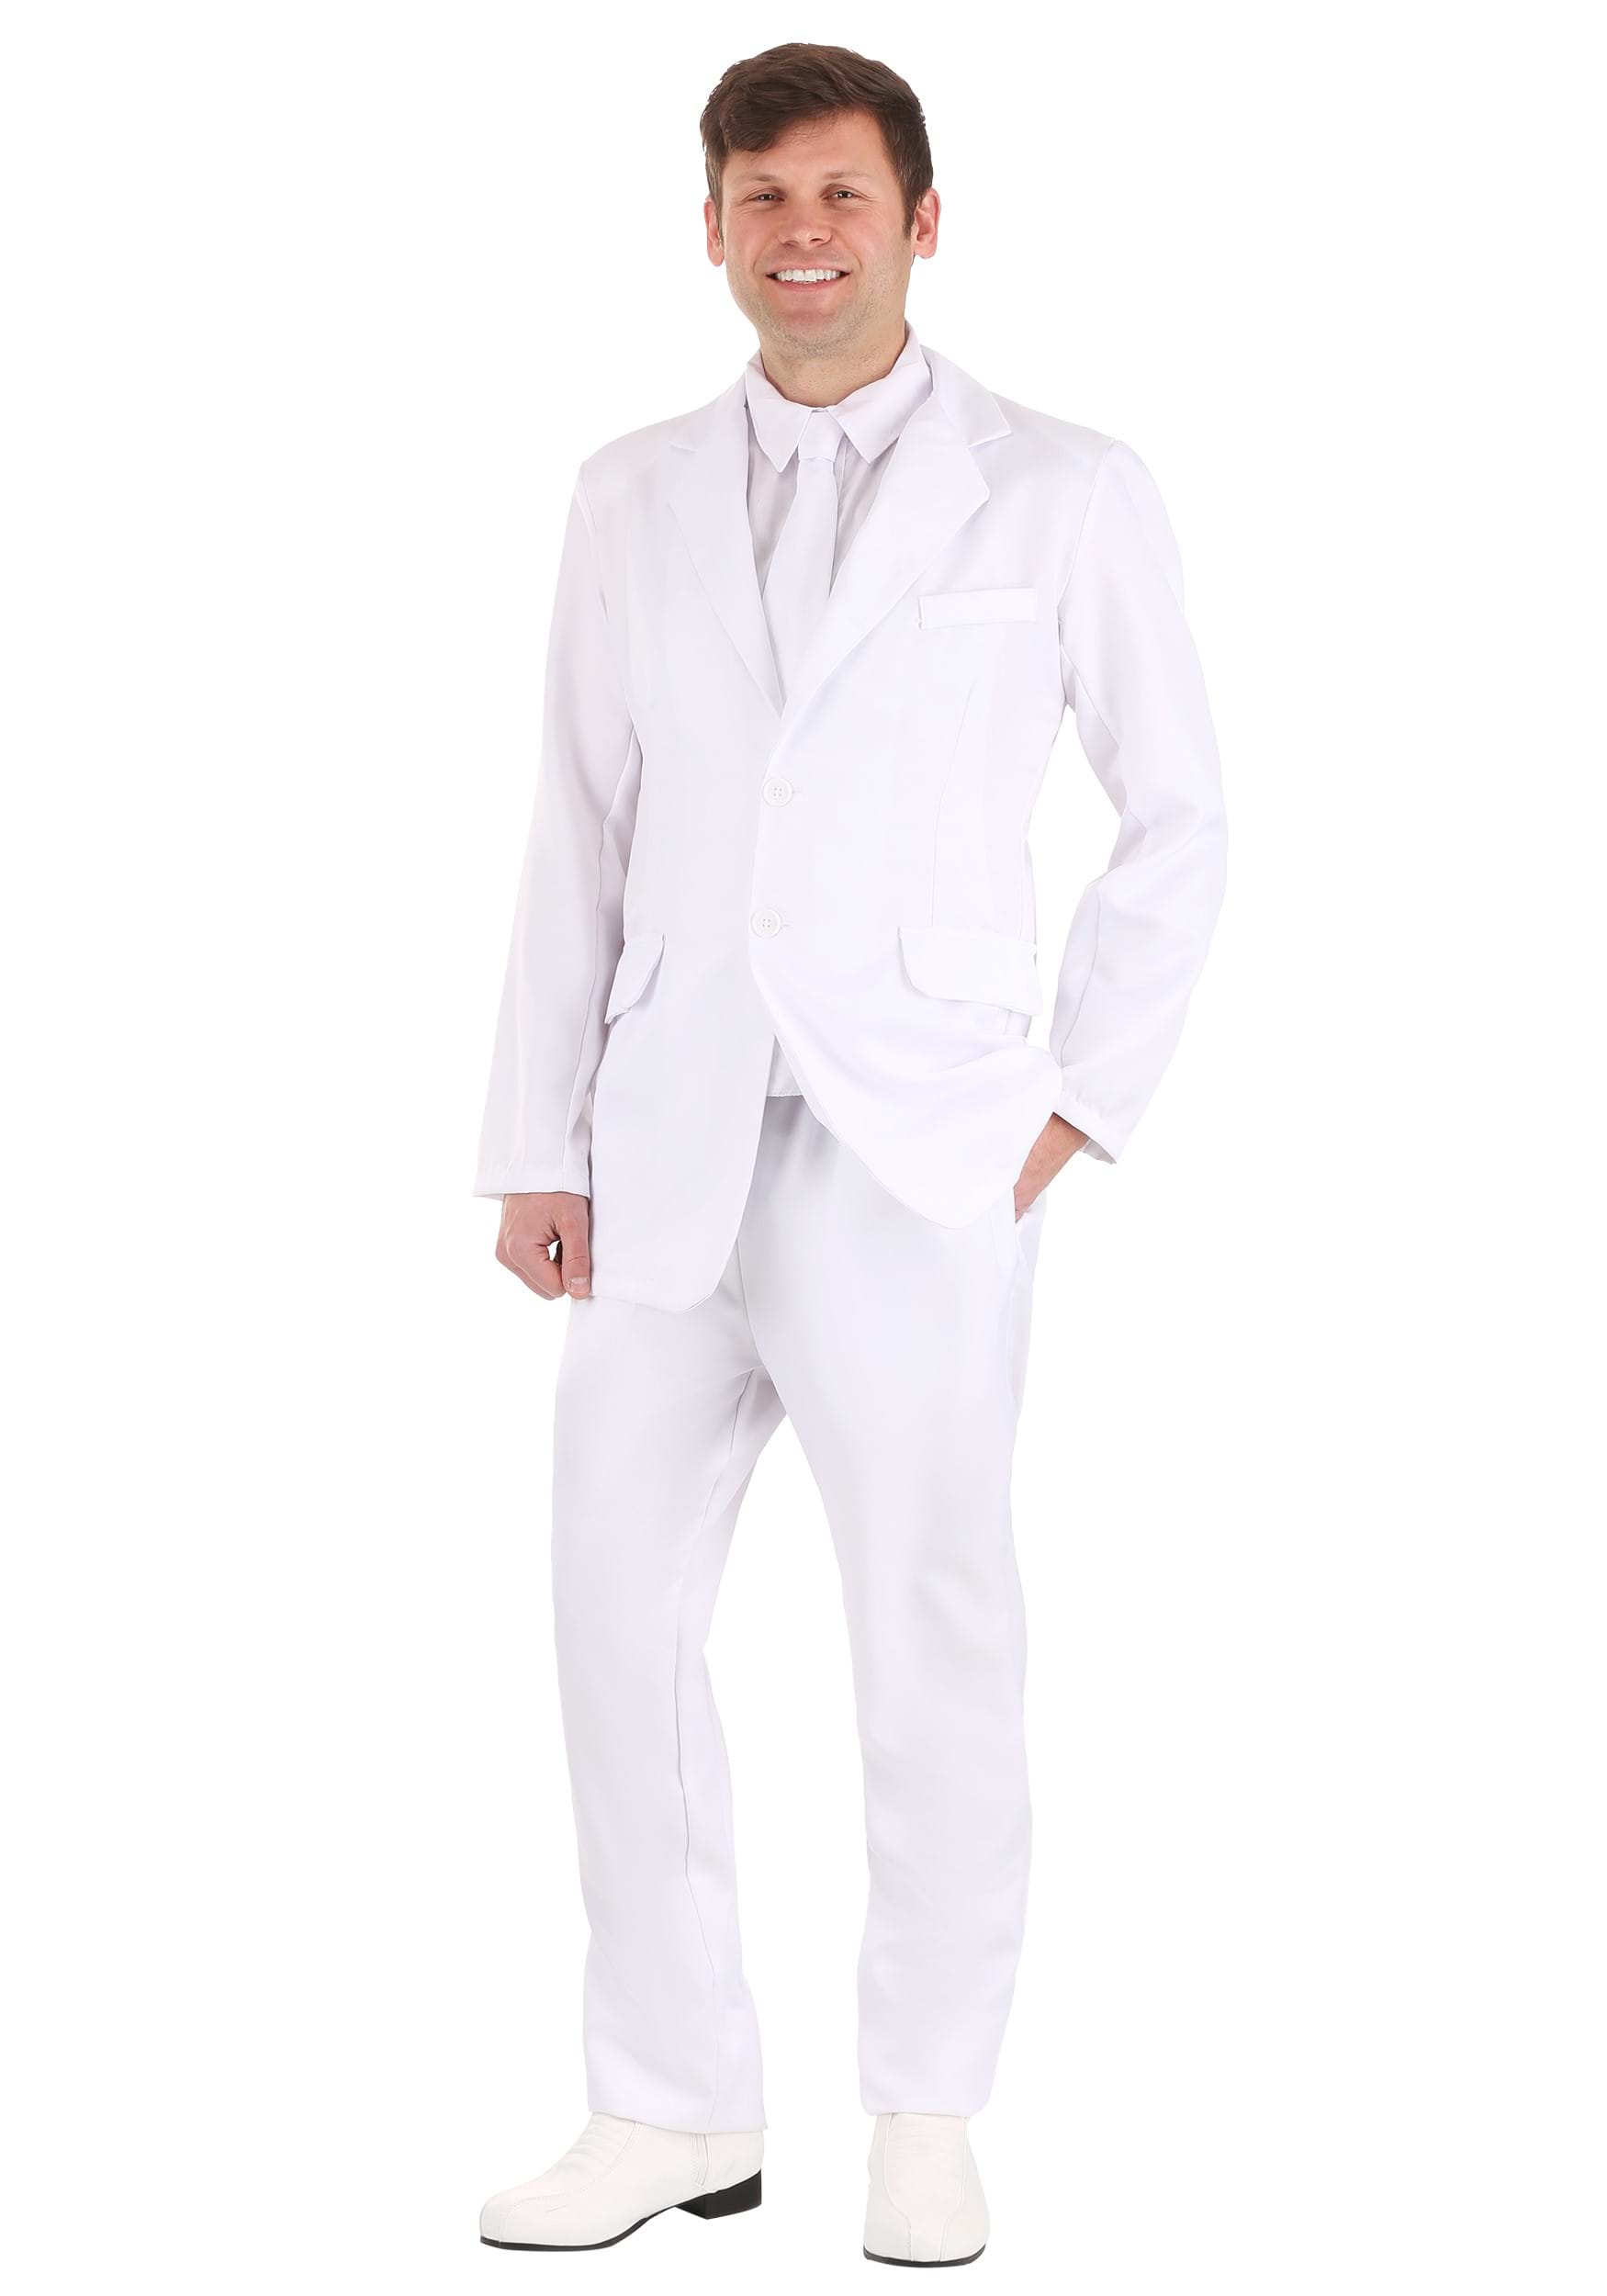 White Fancy Dress Costume Suit For Men , 1920s Mobster Fancy Dress Costume